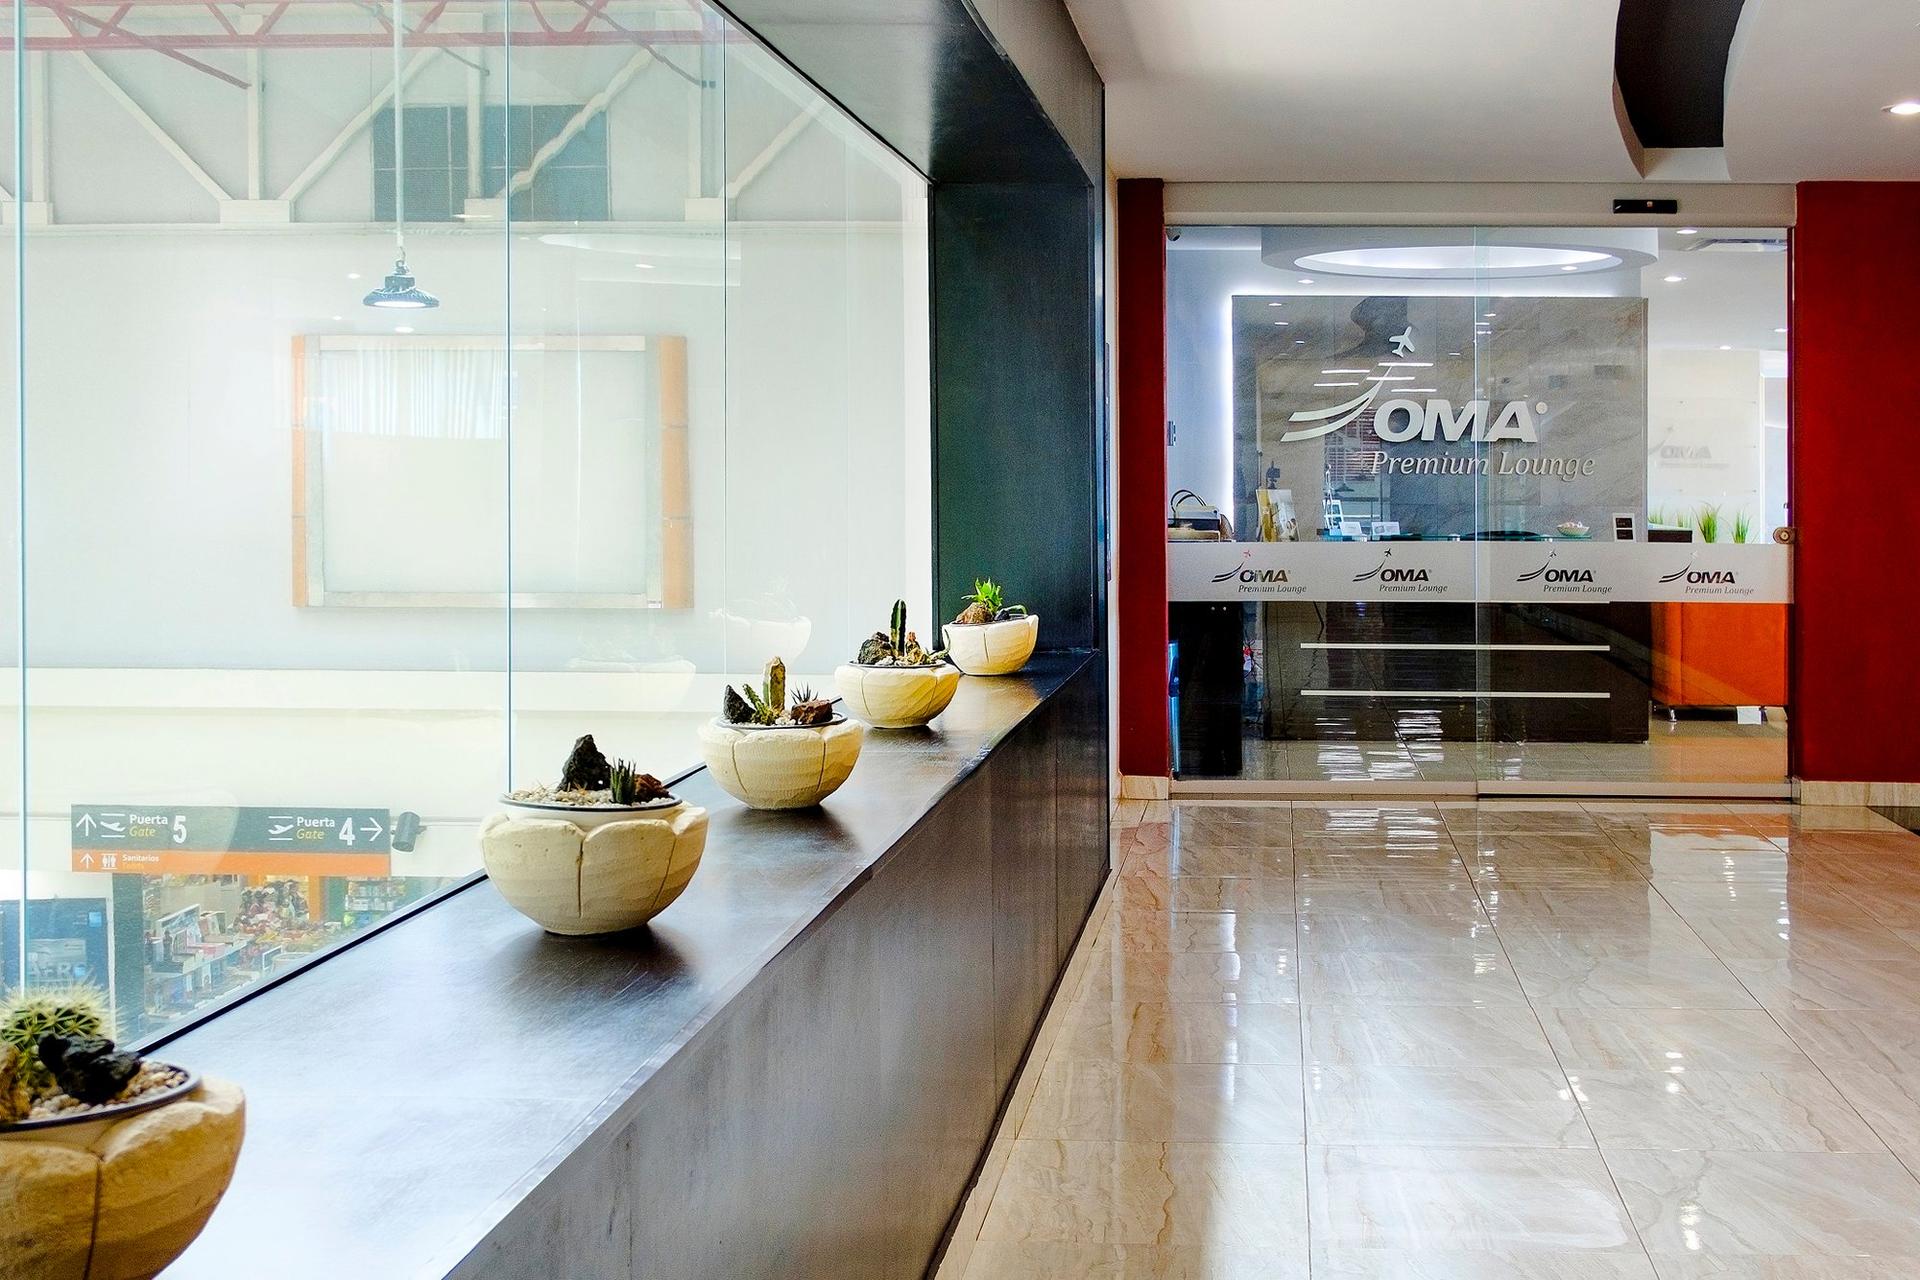 OMA Premium Lounge image 17 of 22